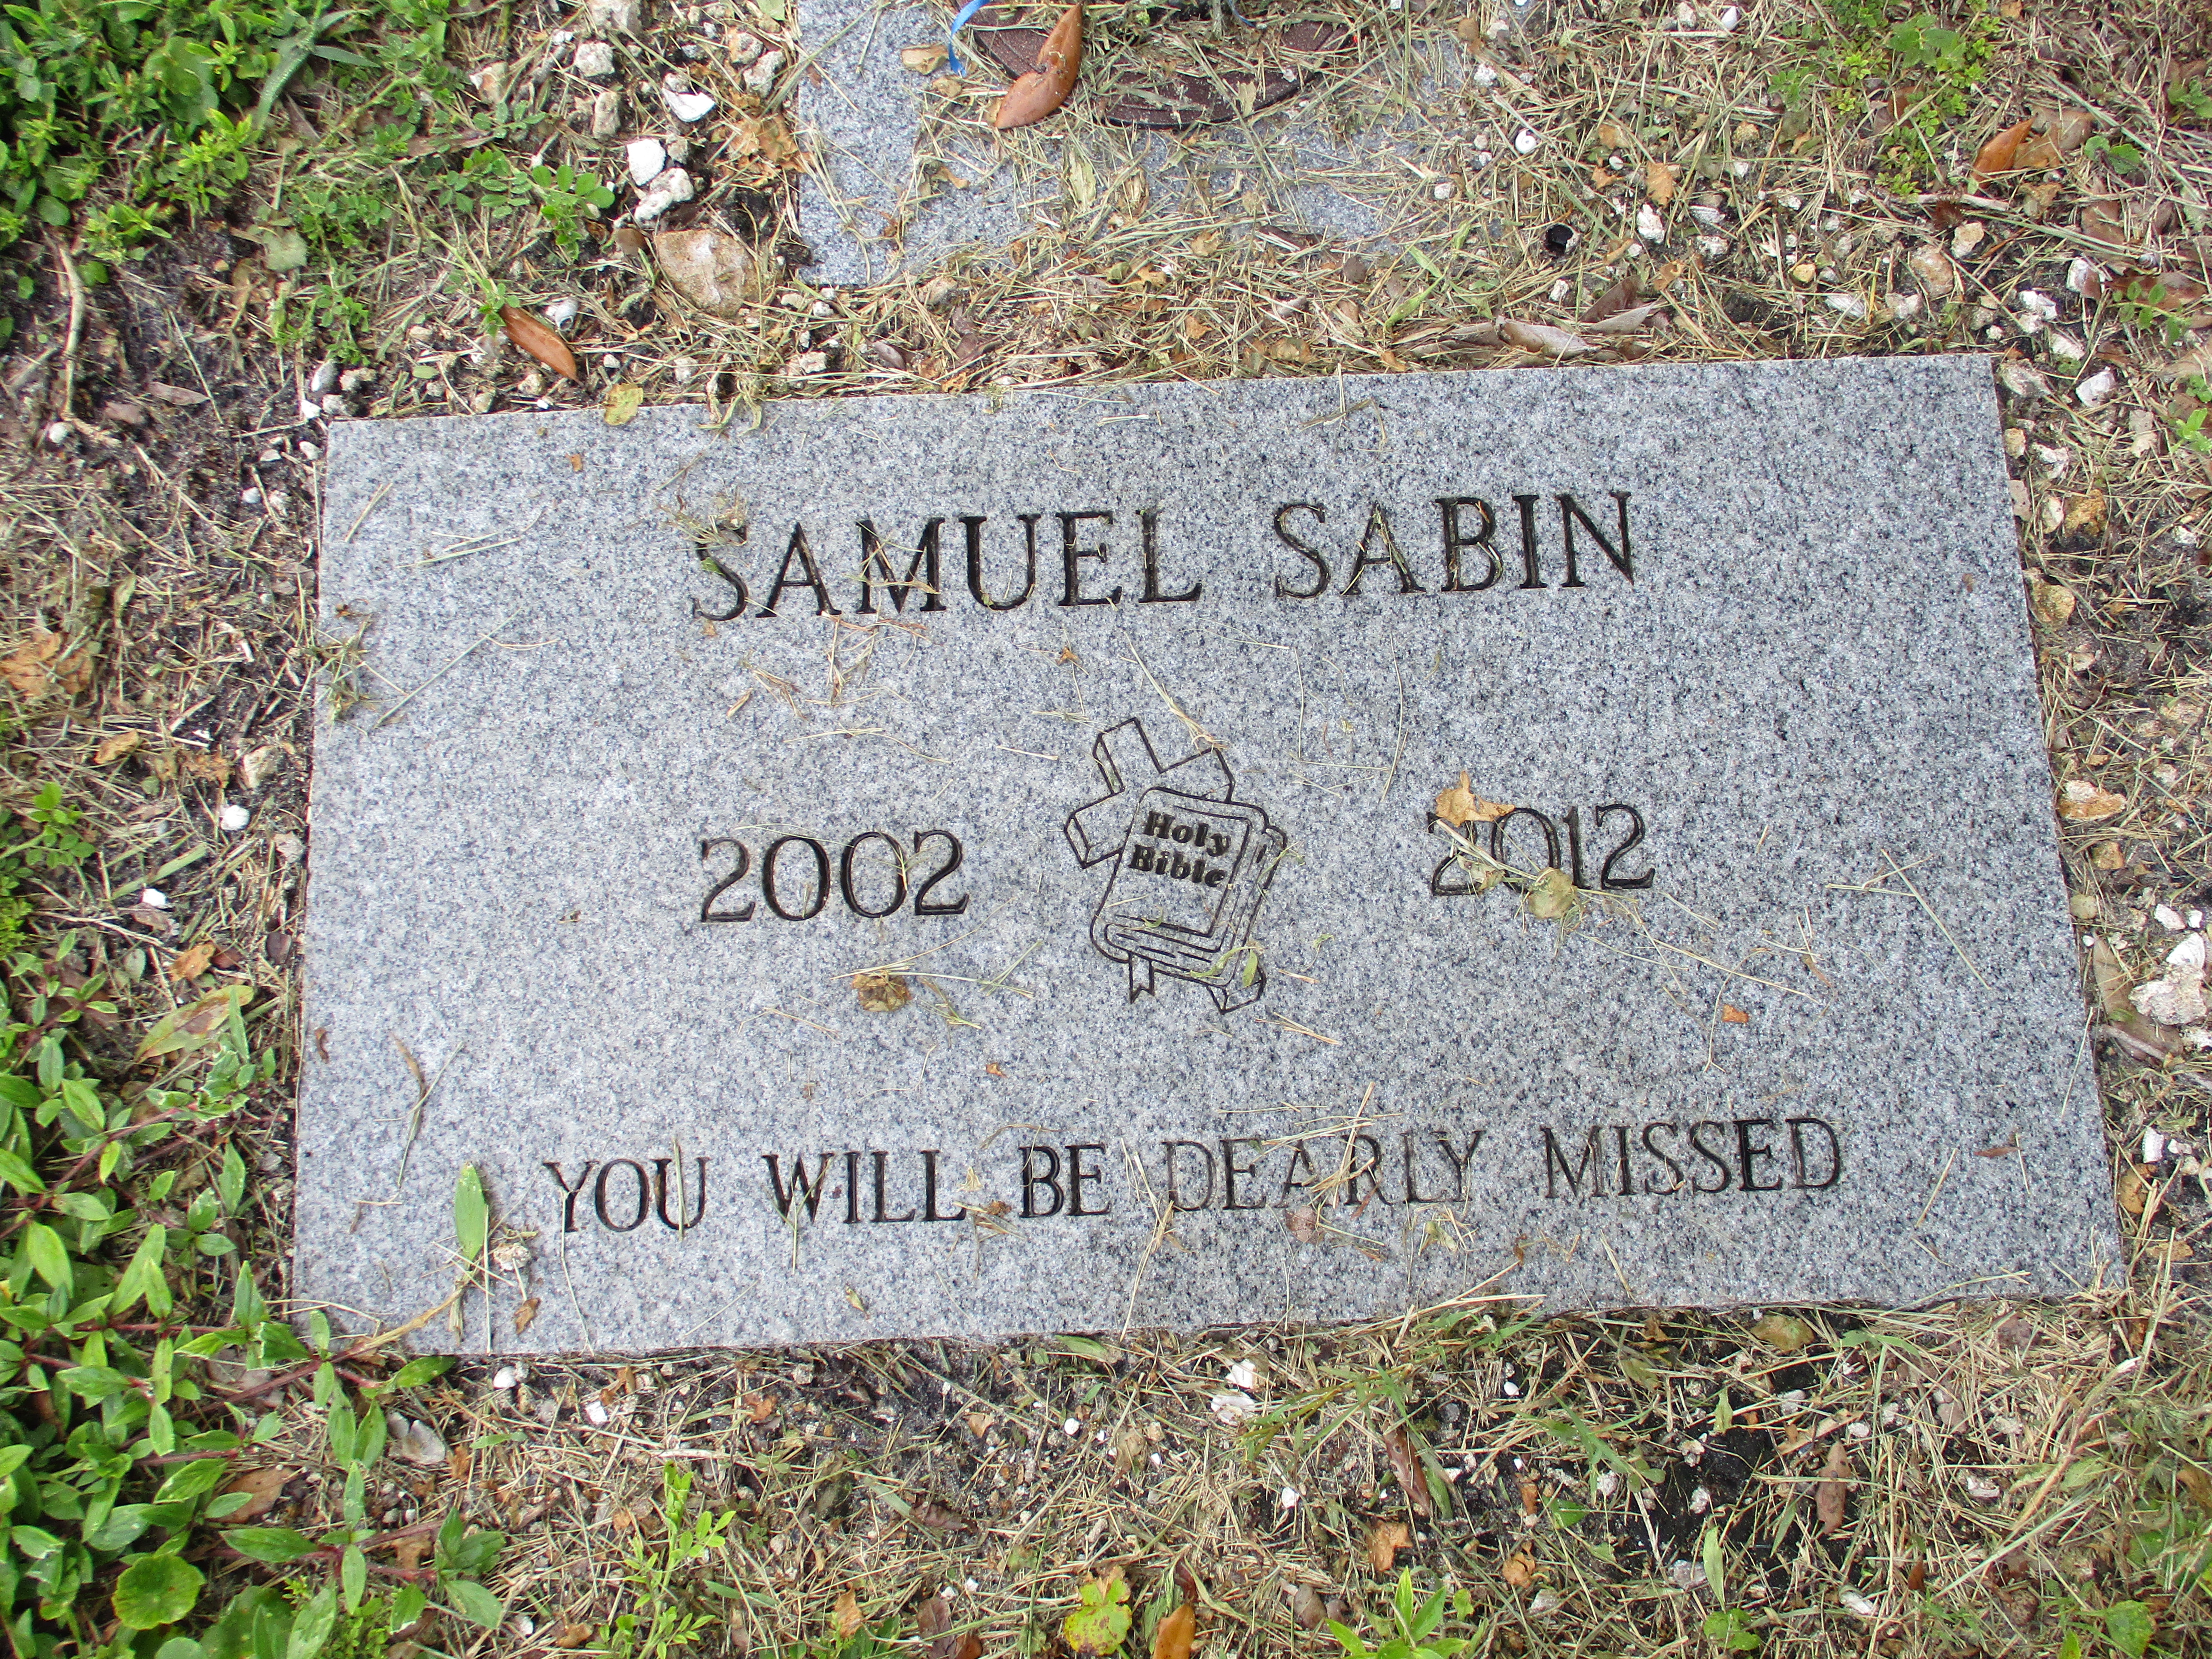 Samuel Sabin